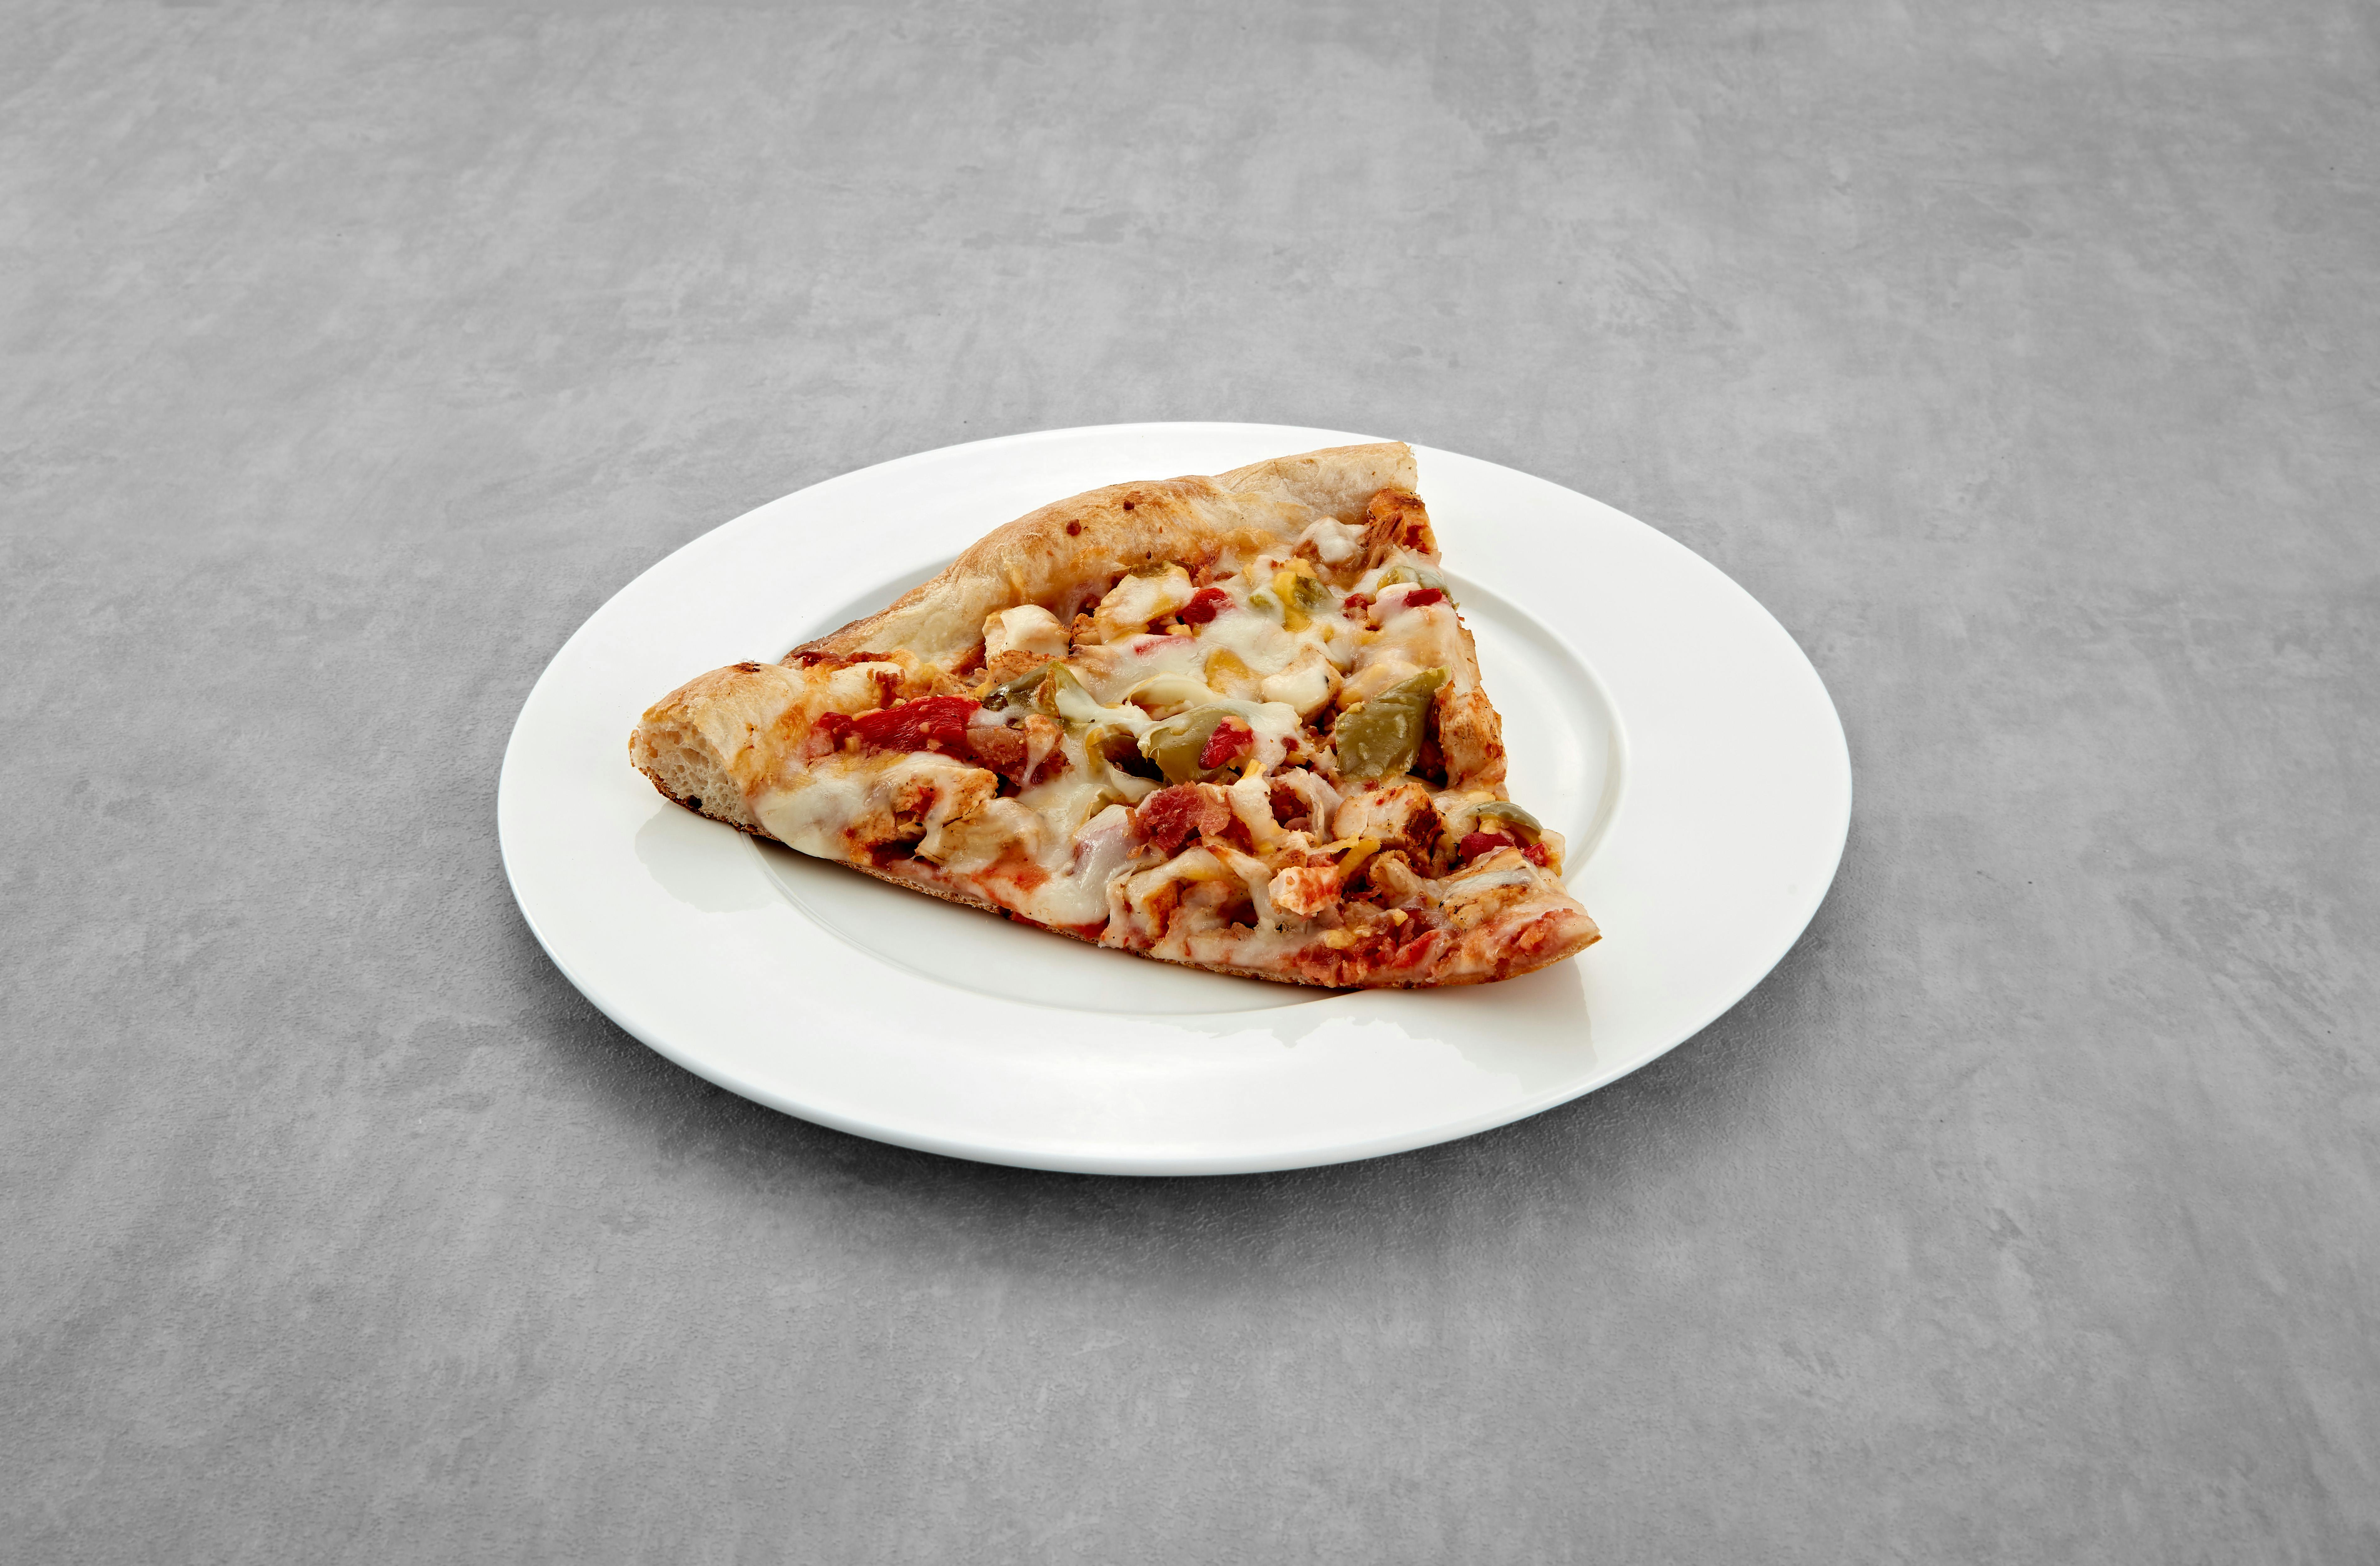 Alamo Pizza Slice from Mario's Pizzeria in Seaford, NY